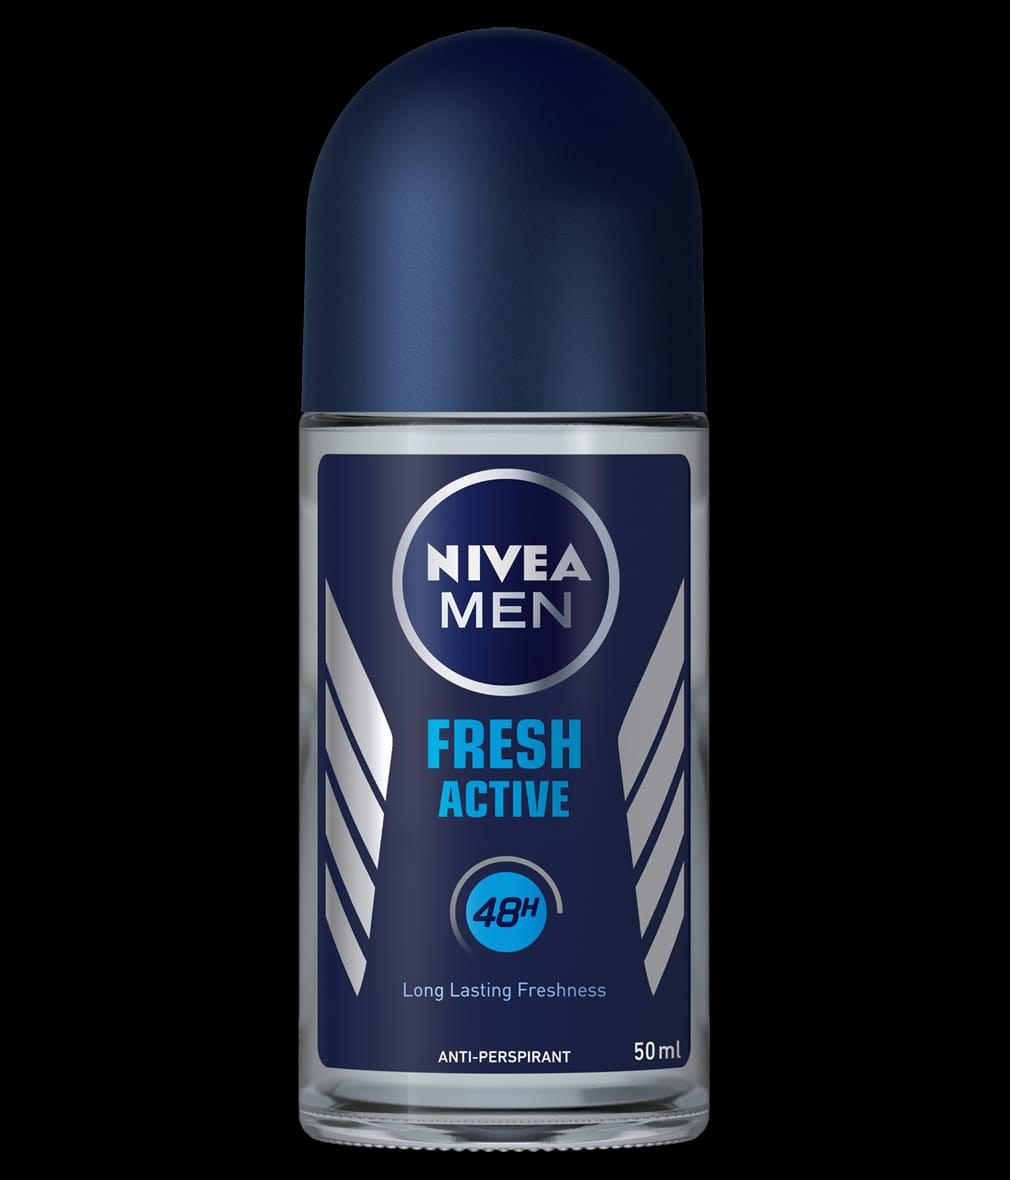 Nivea Men Active Clean Shower Gel 250 ml